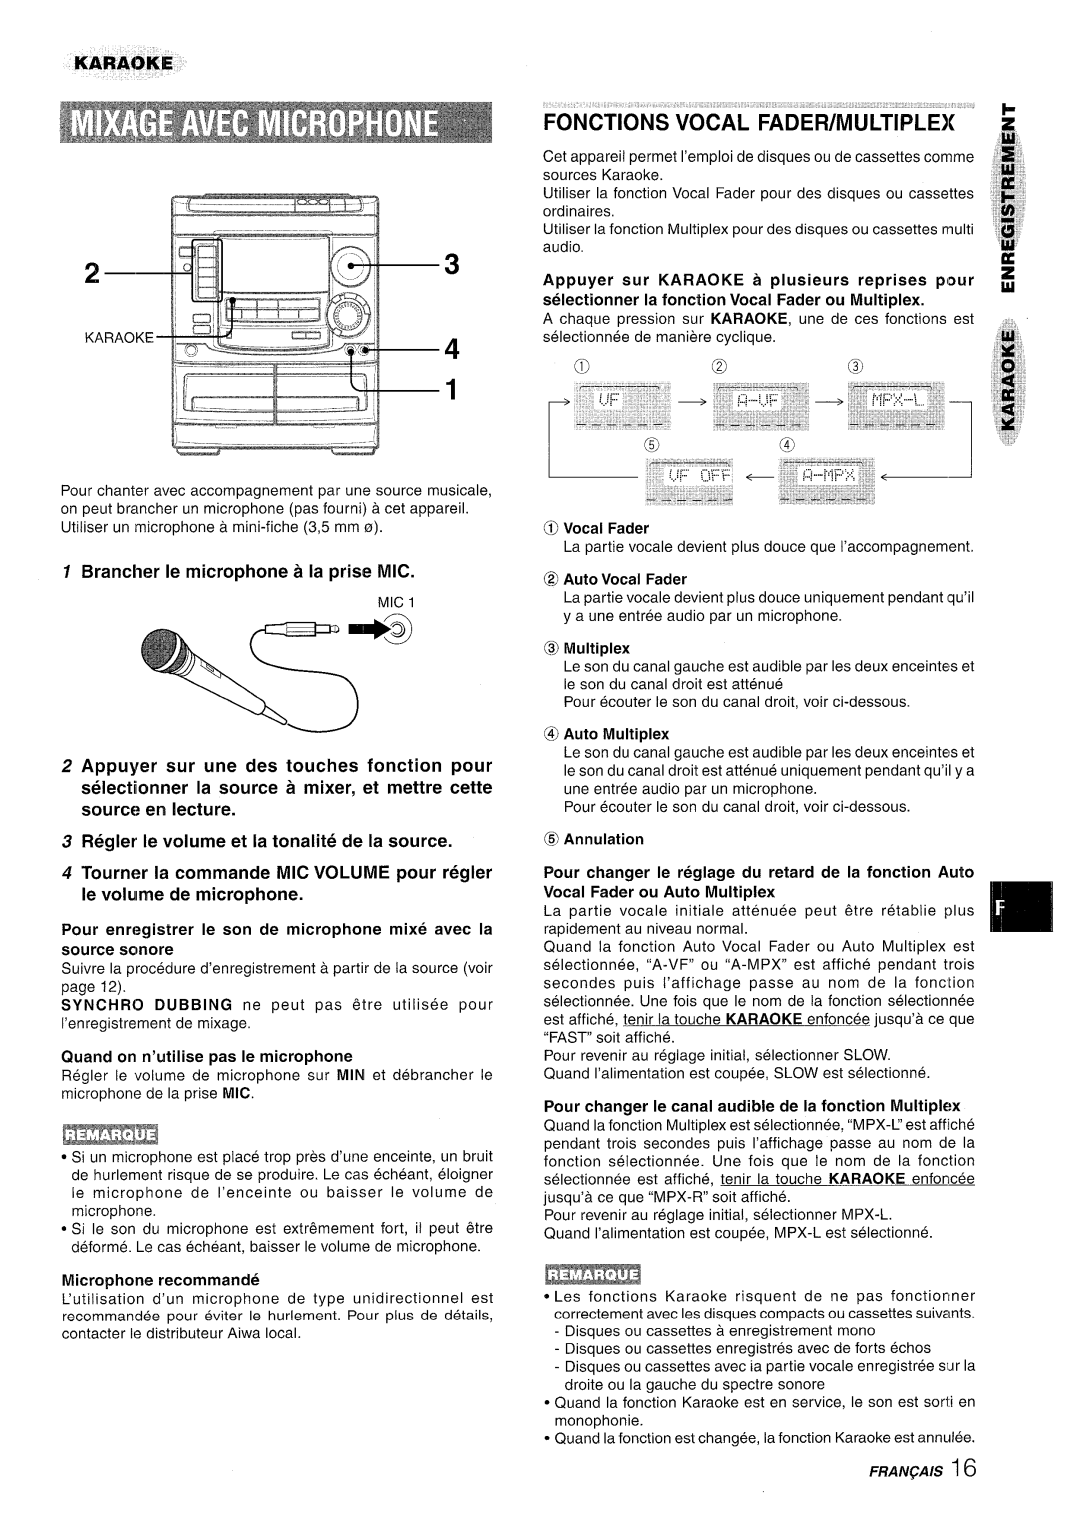 Aiwa NSX-A508 manual FoNcnorw VOtiAL FADER/MULTIPLEi” k, Branchr?r Ie microphone a la prise MIC, r D -w 